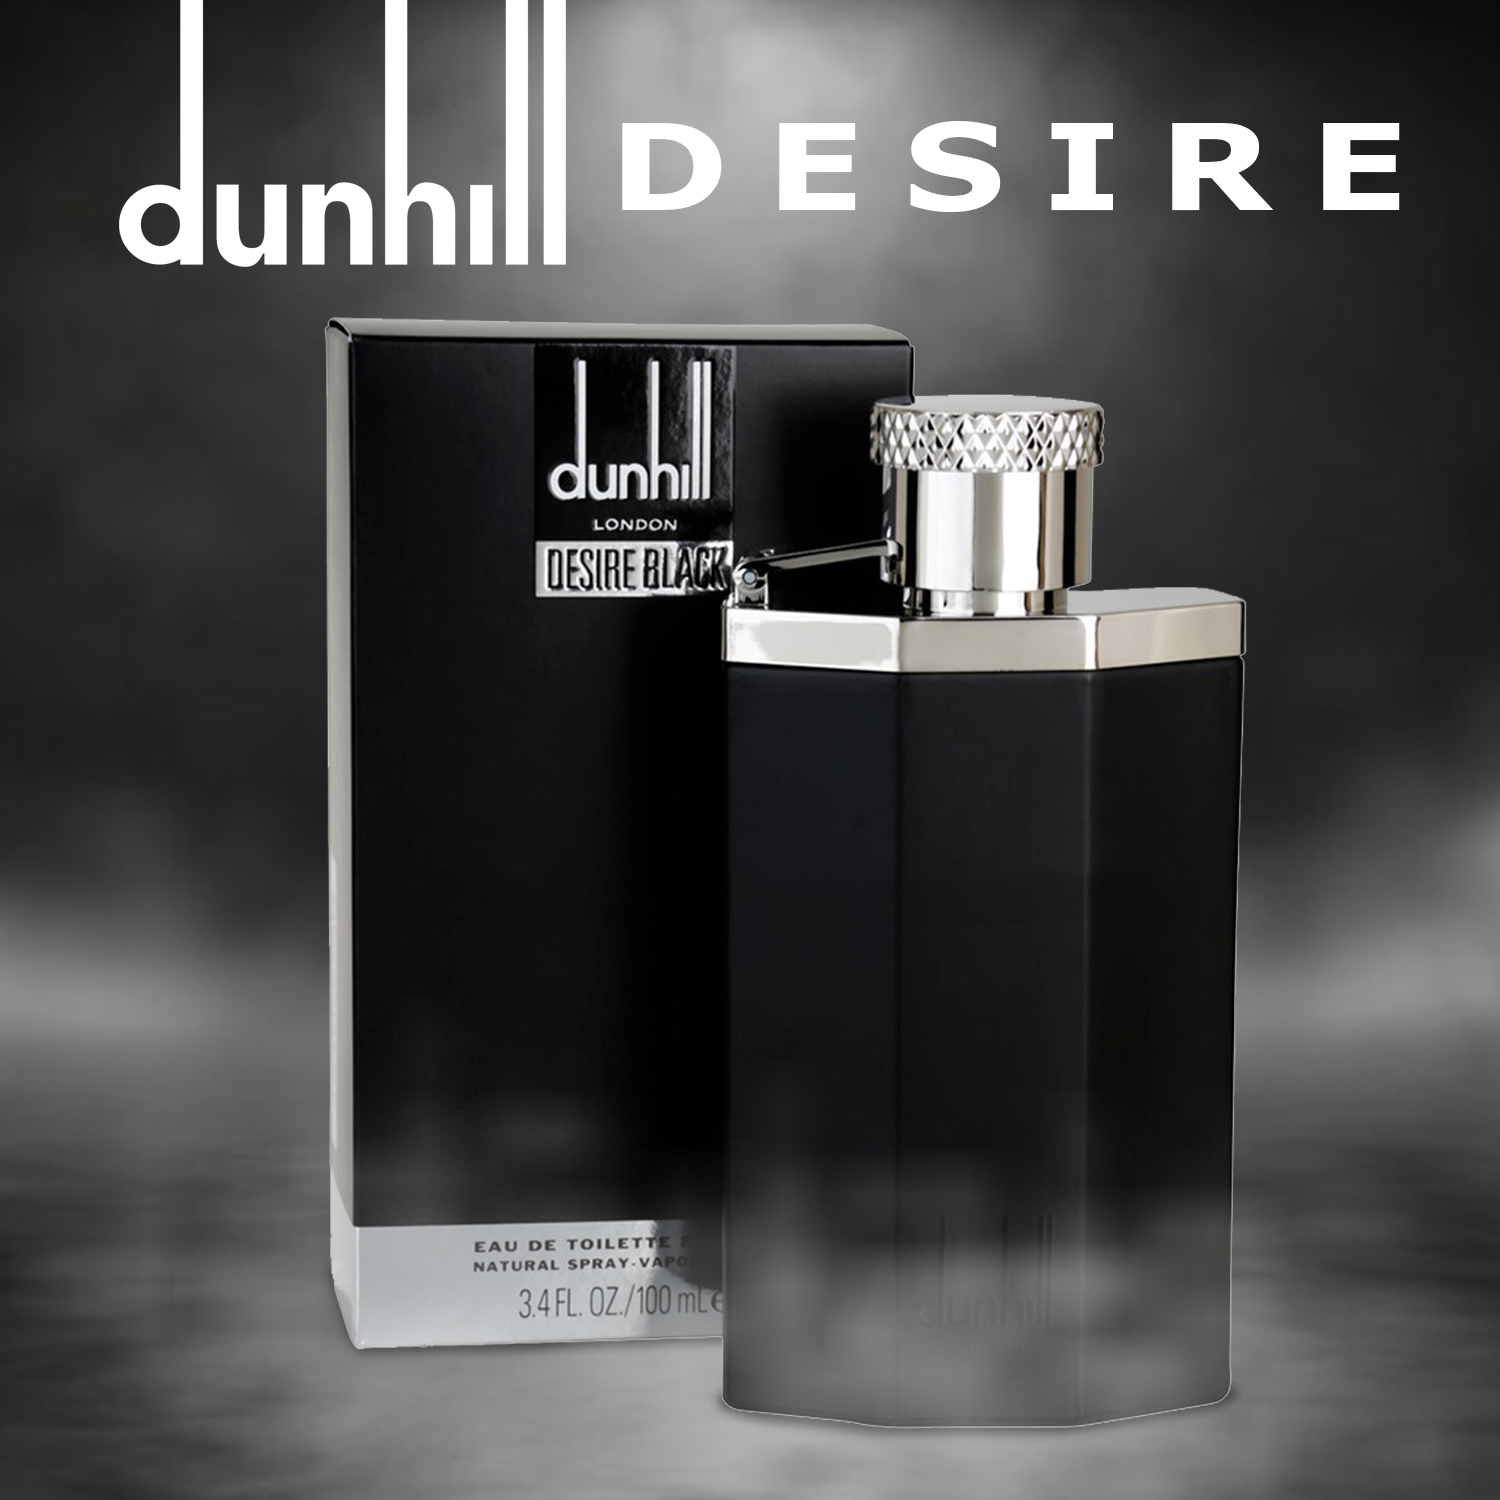 desire black dunhill